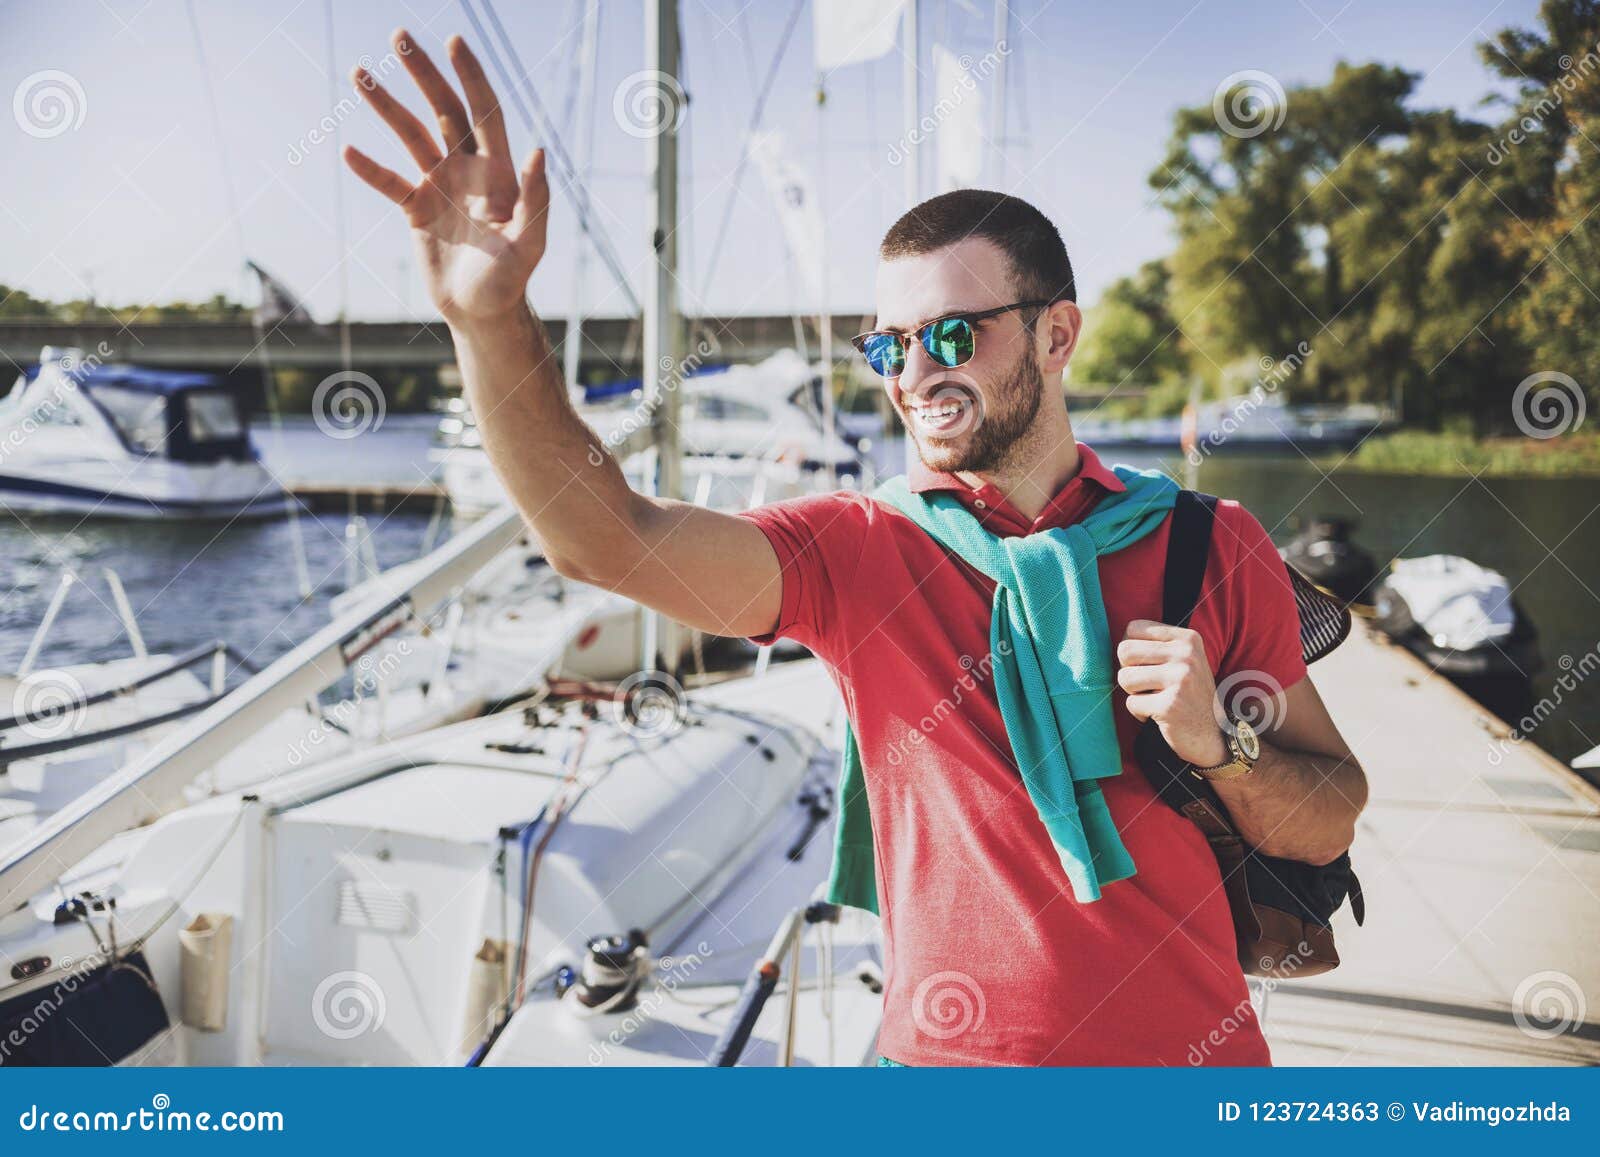 yachting club guy